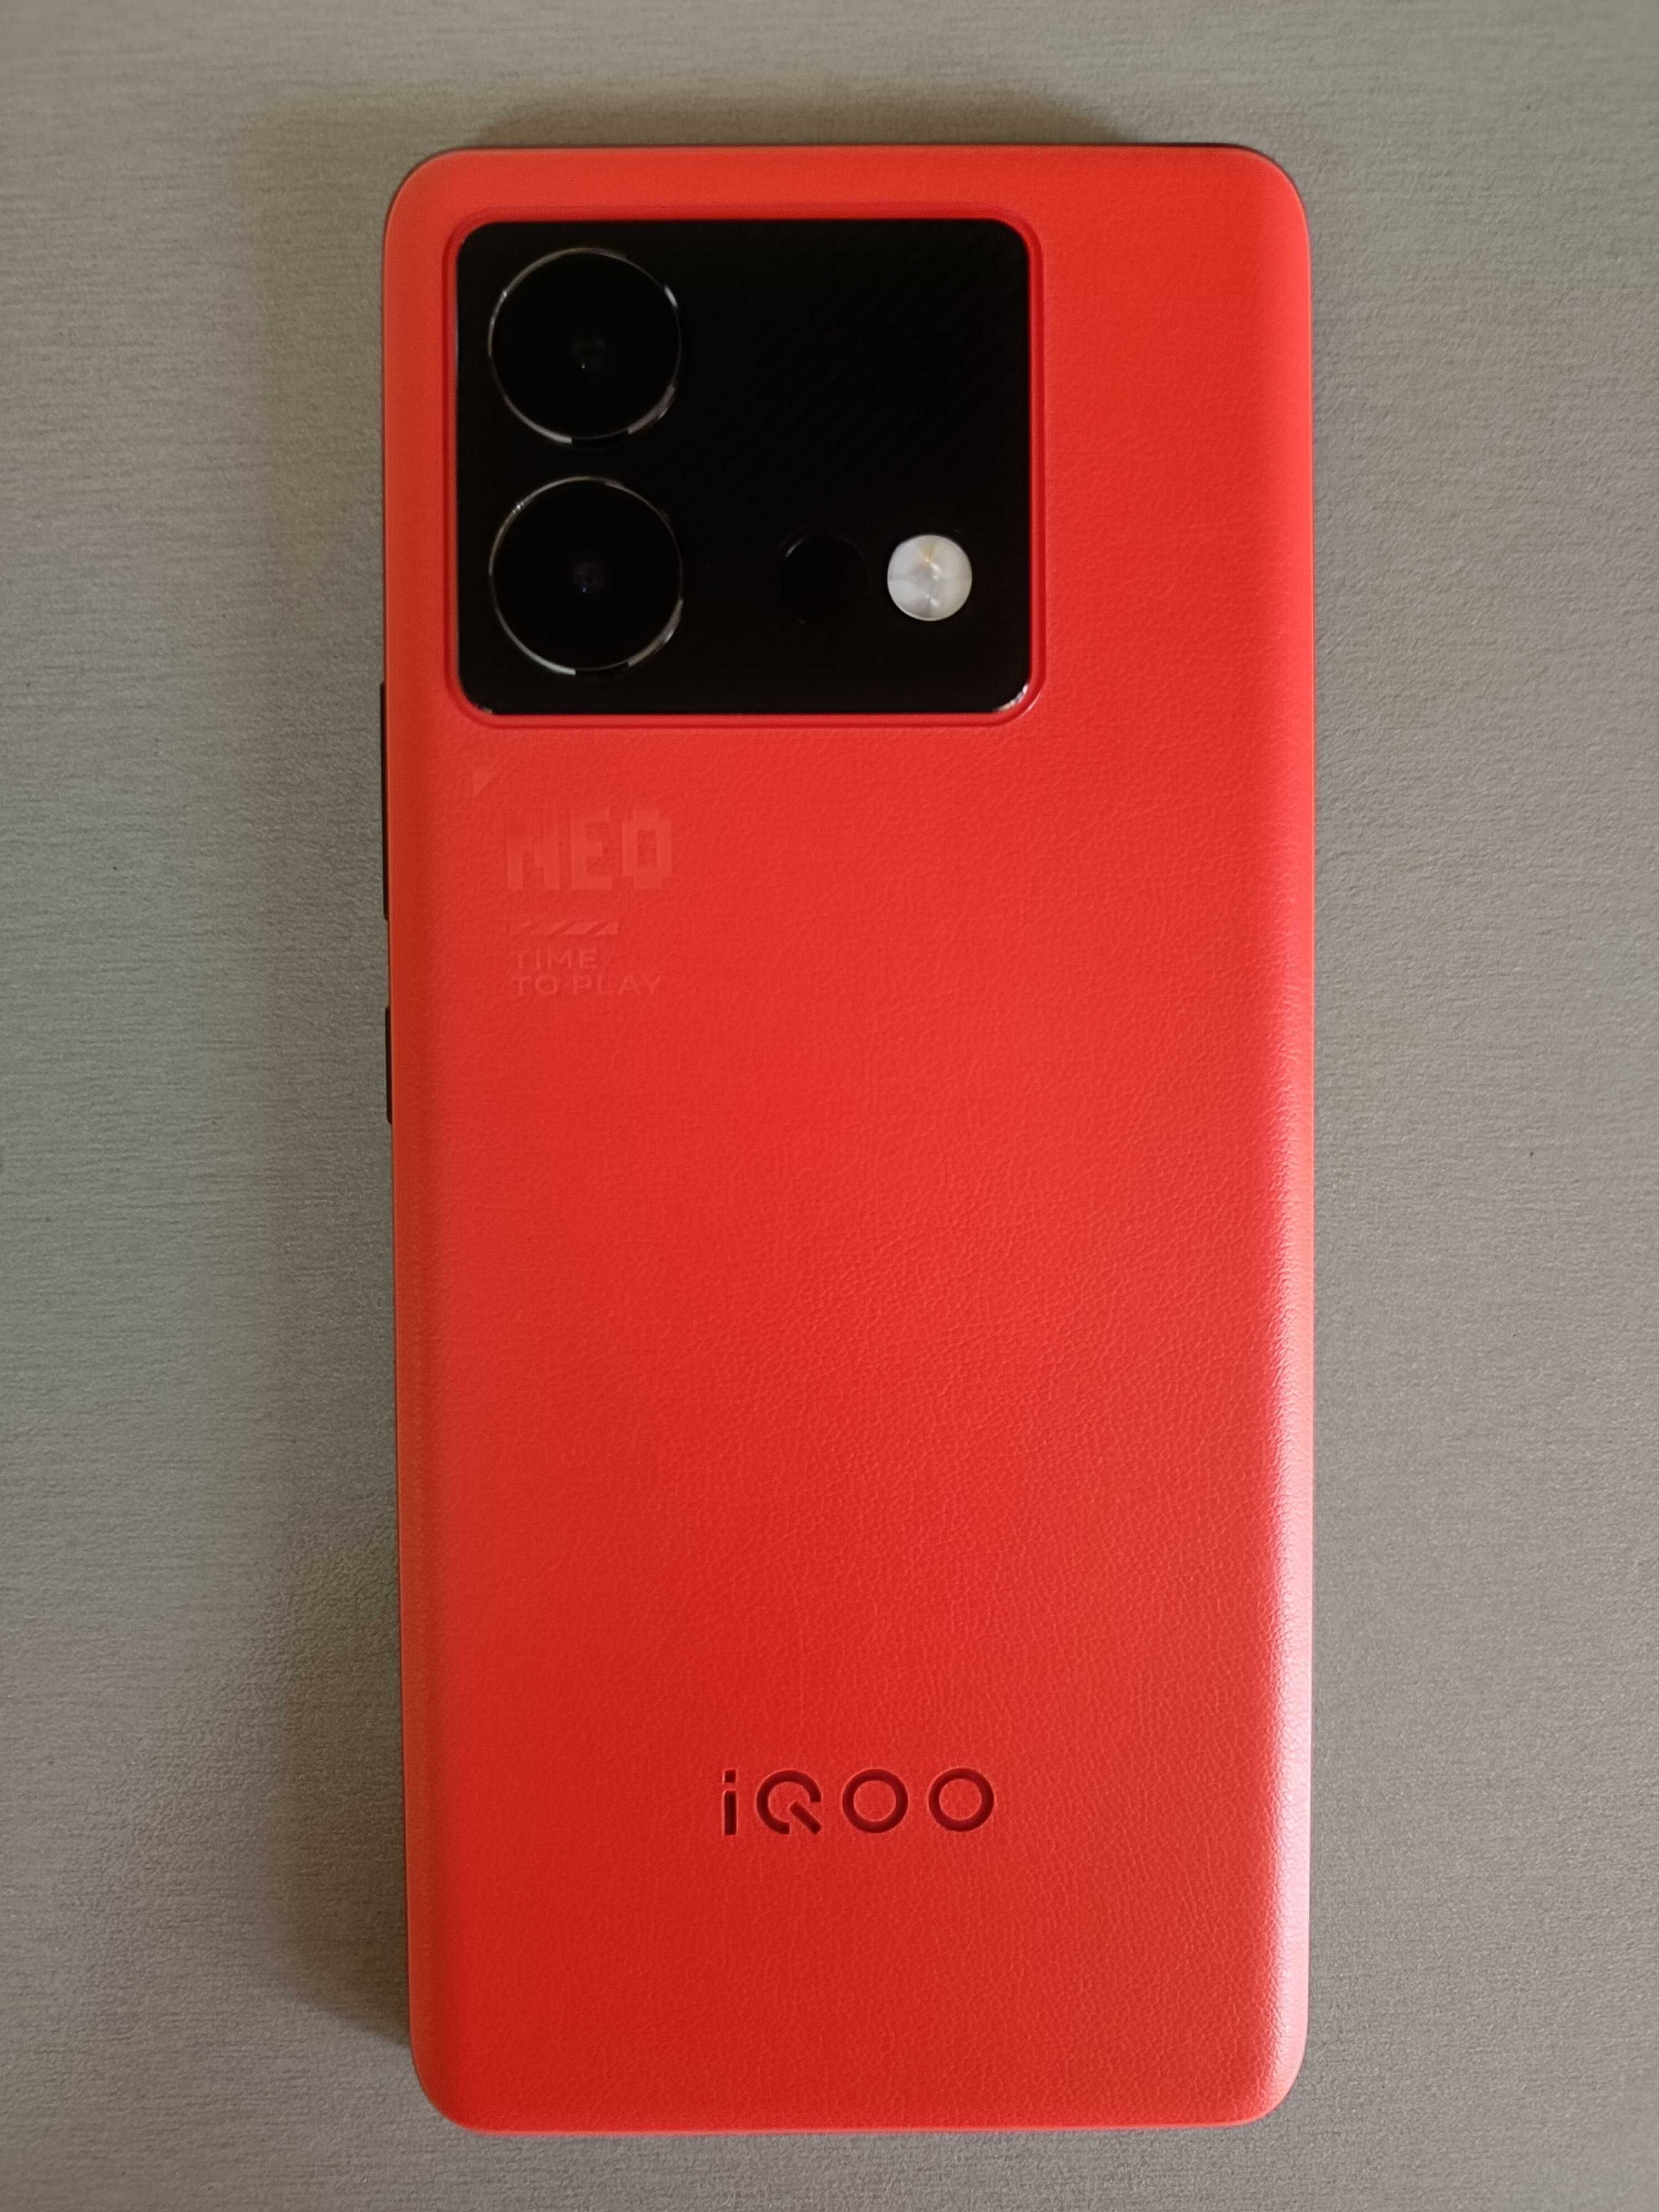 Vivo iQOO Neo 8 Pro 16/256 Гб